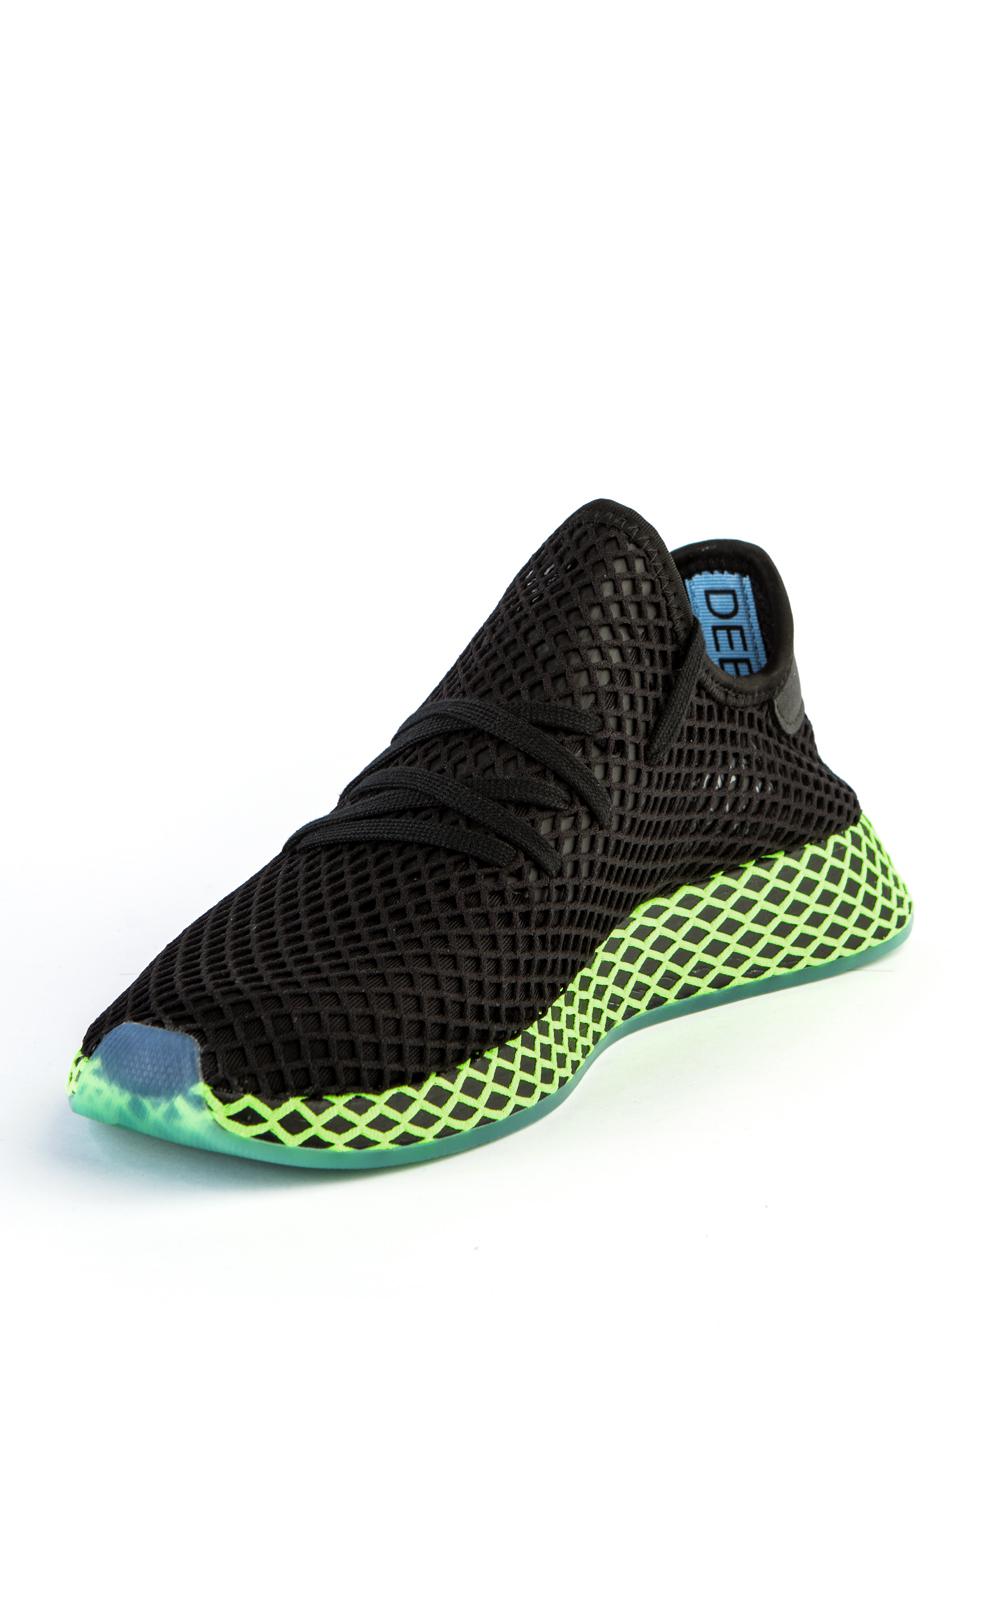 adidas Originals Lace Deerupt Runner Black/green for Men - Lyst